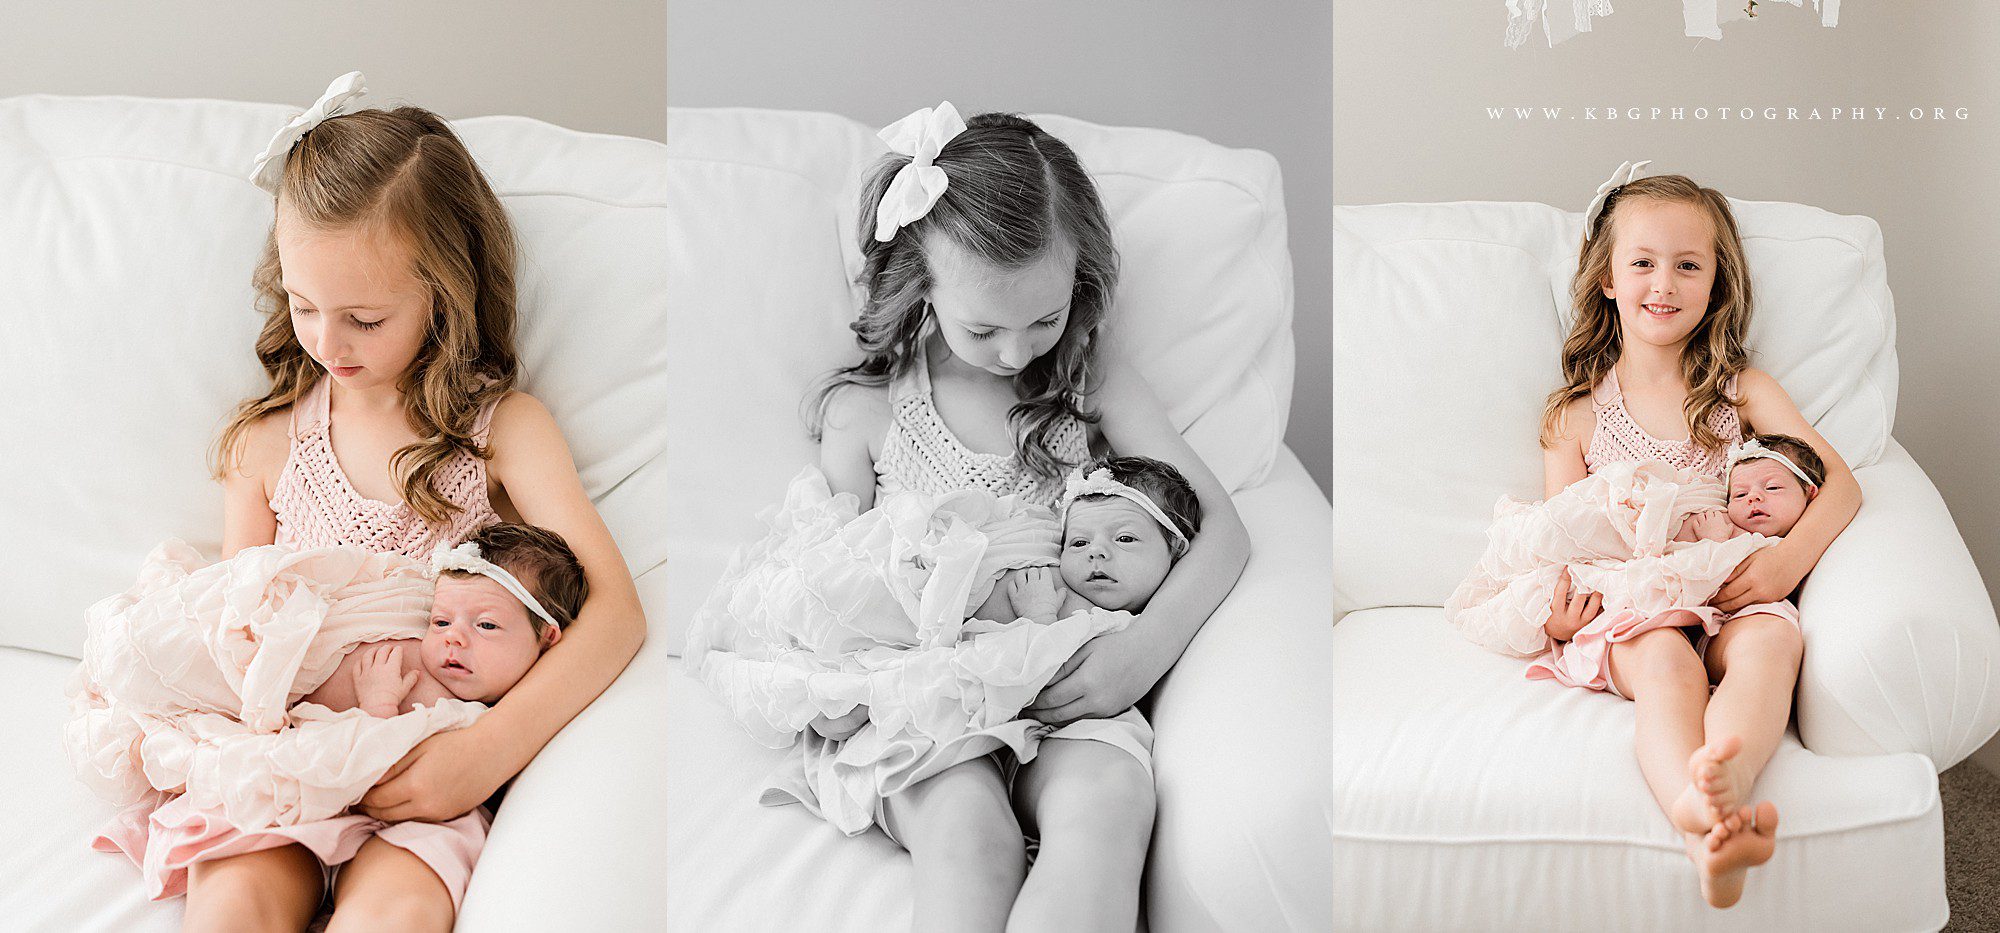 marietta baby photographer - big sister holding newborn baby sister